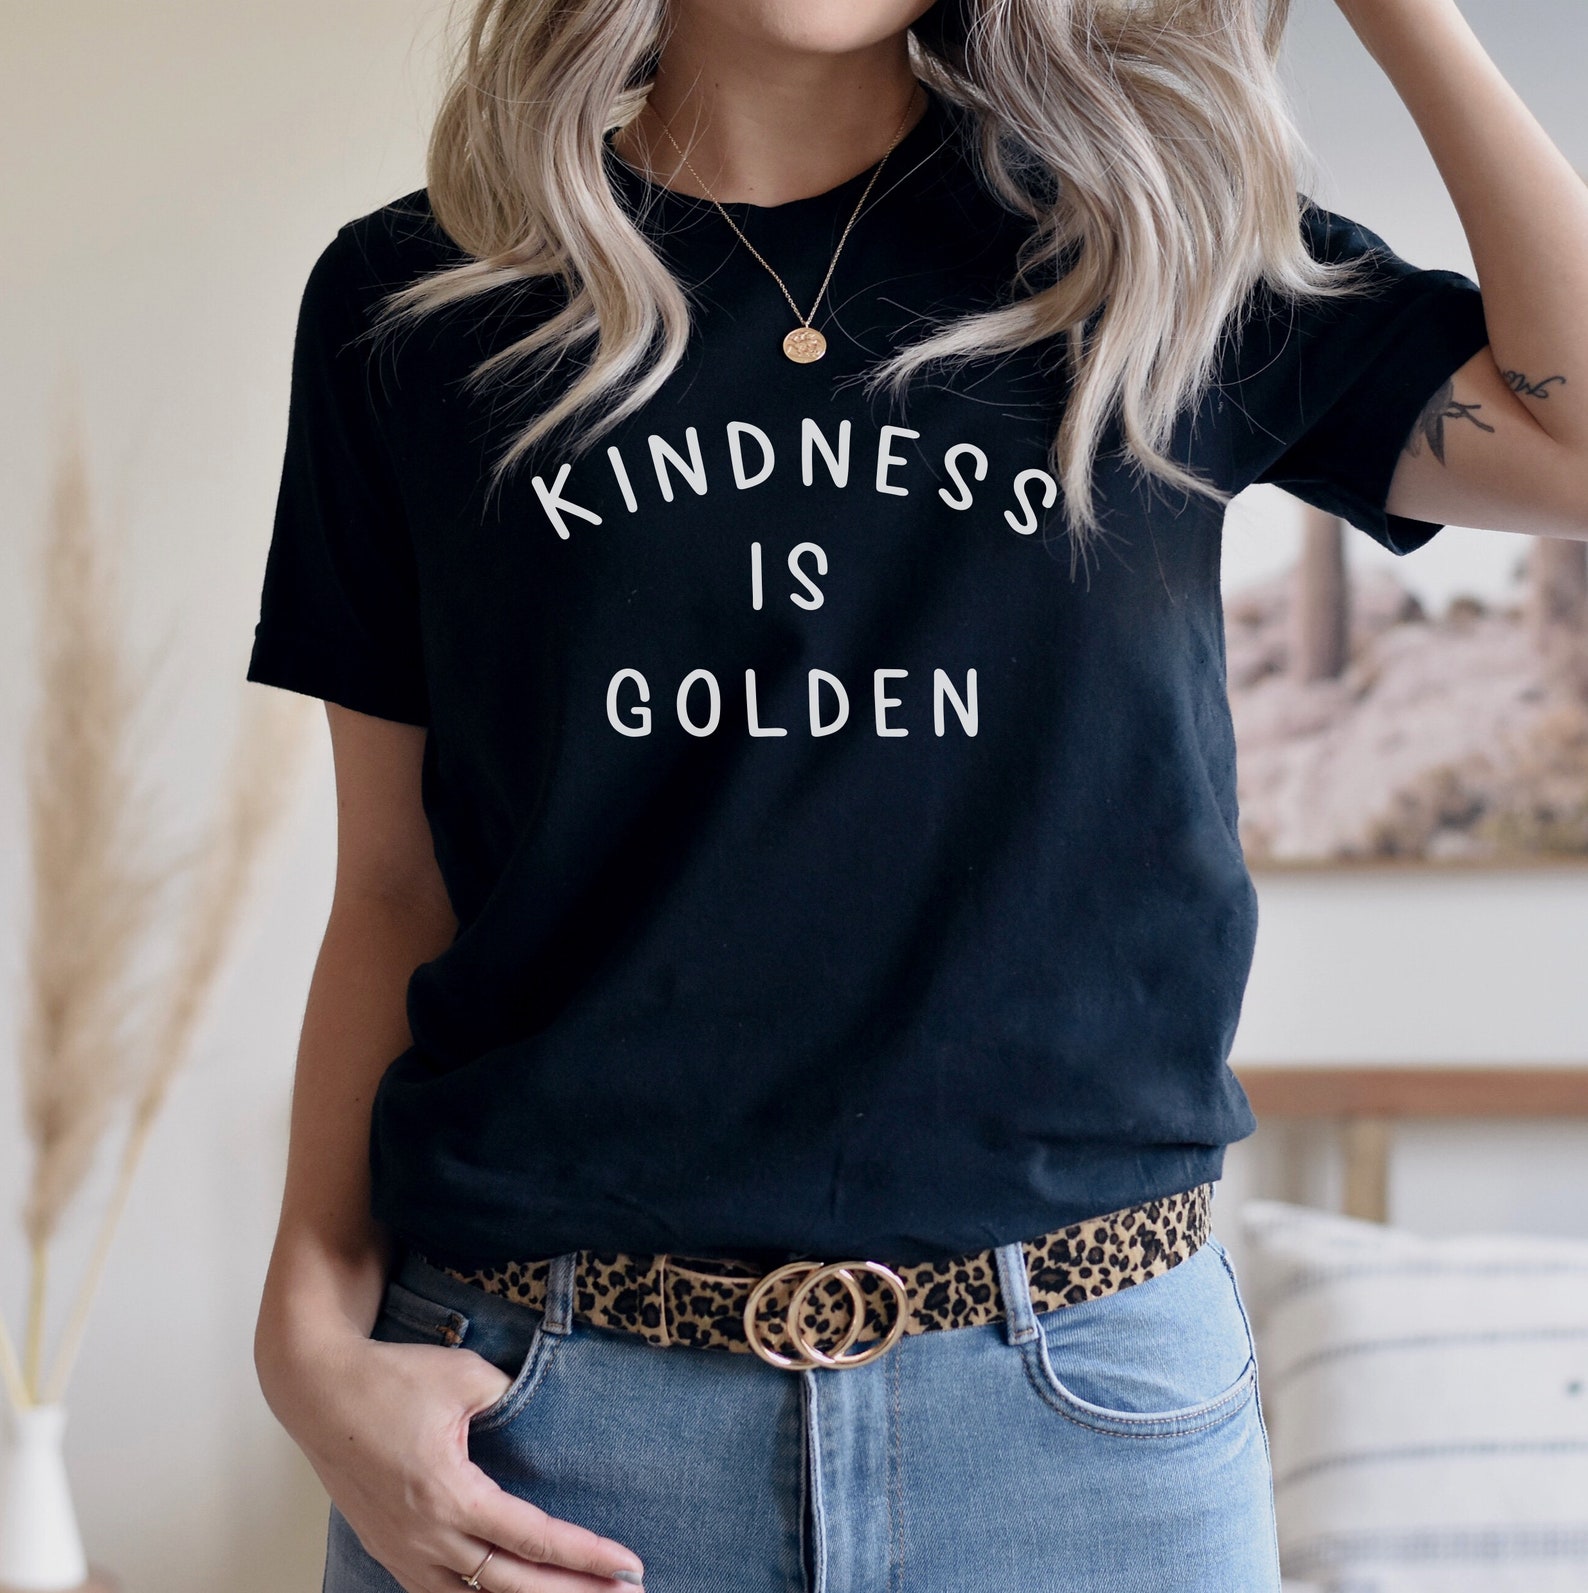 Kindness Is Golden T-Shirt Kindness T-shirt Anti bullying | Etsy